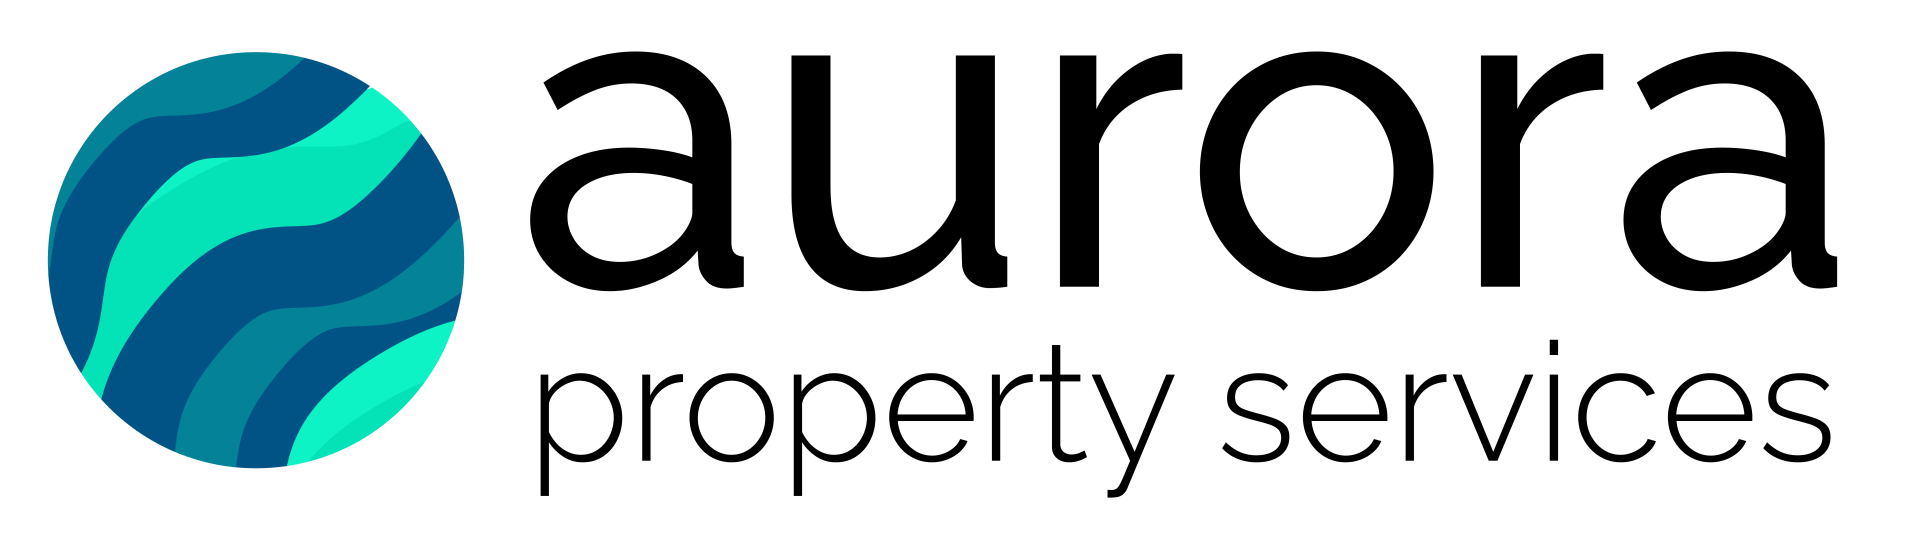 Aurora property services logo